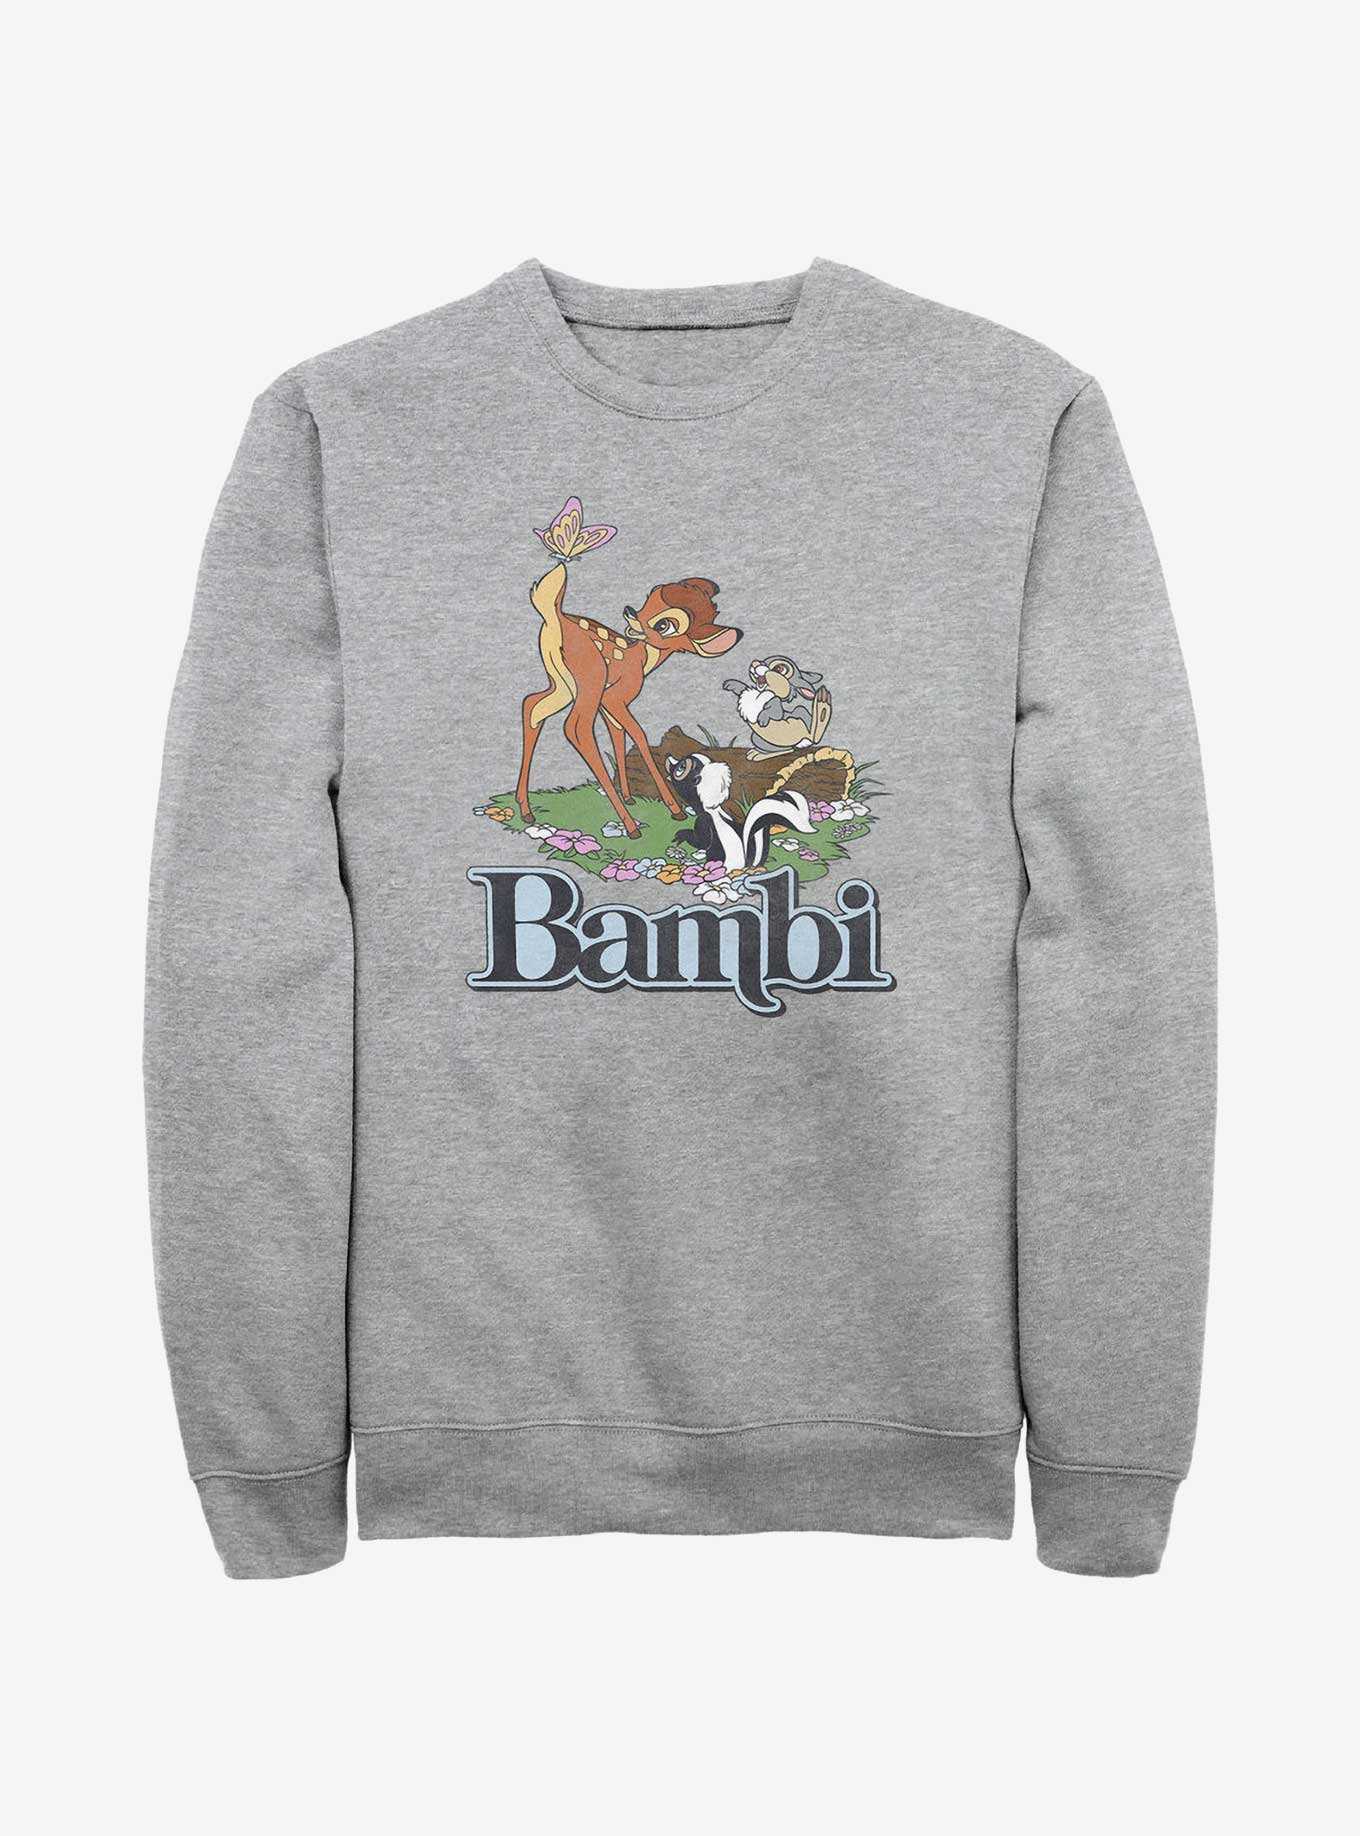 OFFICIAL Bambi Shirts, Plushes & Merch | BoxLunch